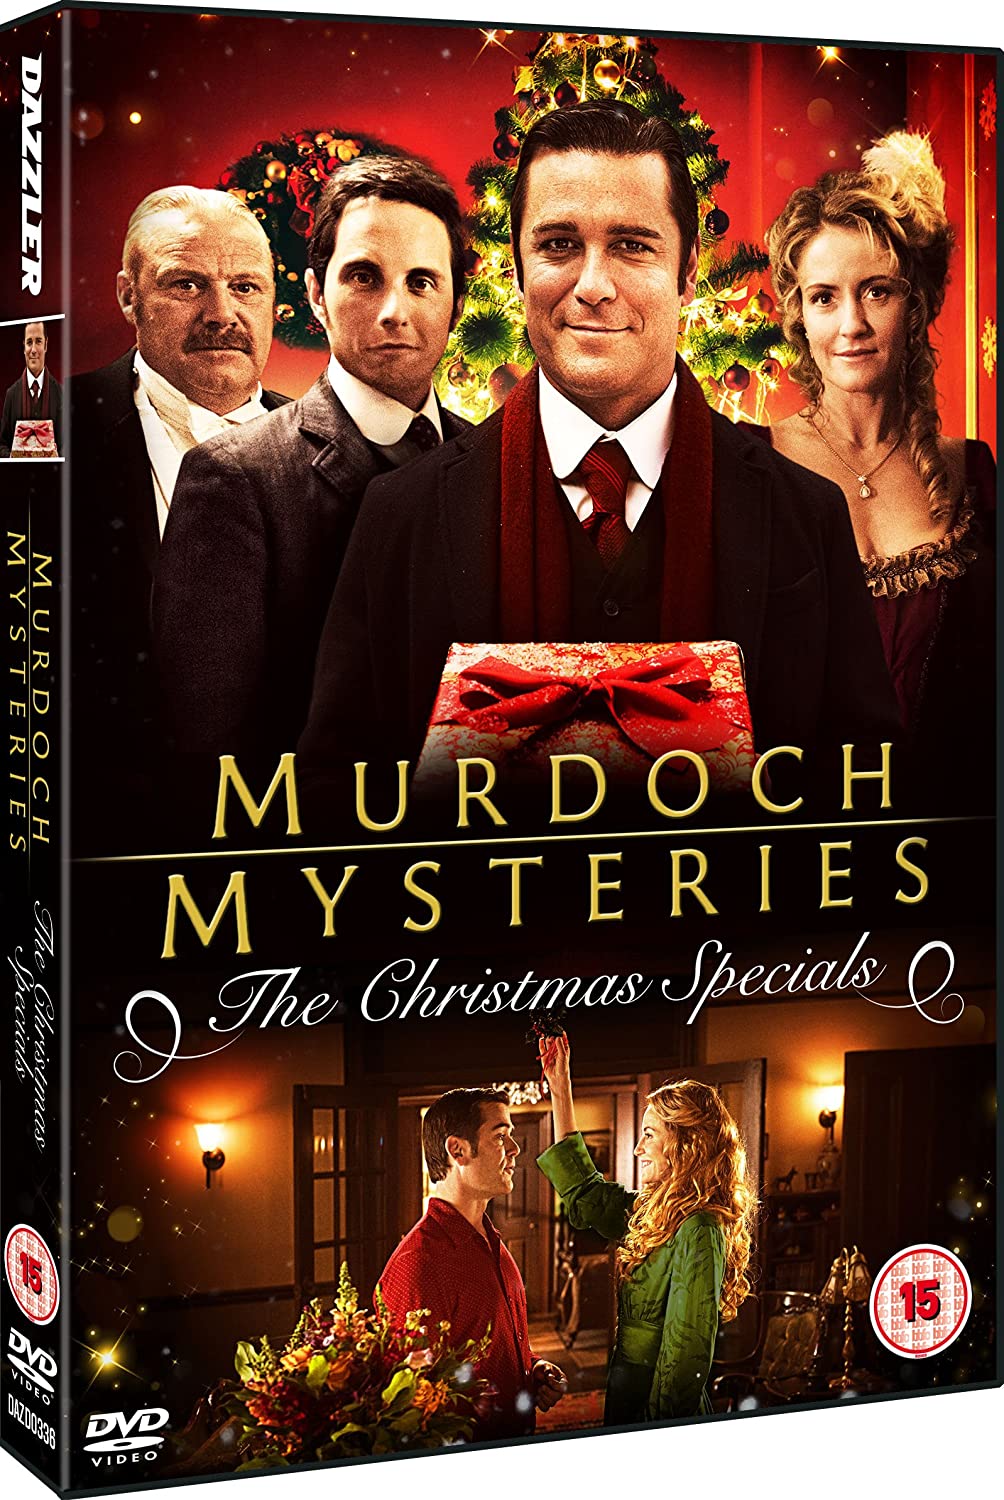 Murdoch Mysteries: The Christmas Specials - Drama/Mystery [DVD]